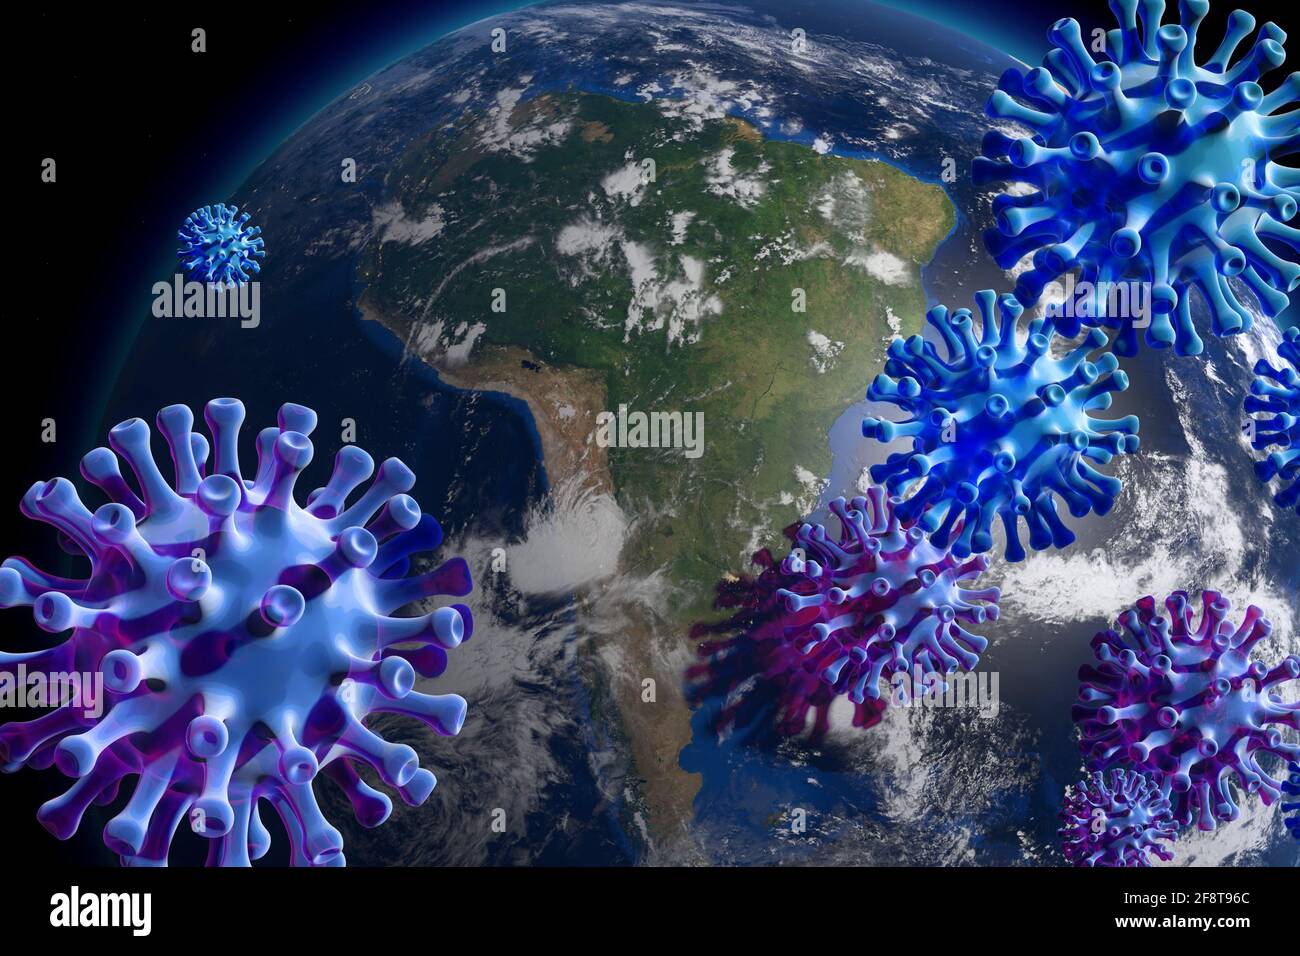 ein fieses Virus befaellt die Welt - Symbolbild: CGI-Visualizierung: Coronavirus Covid 19, SARS 2, Erdball im Weltall: Suedamerika/ a horrible new vir Foto Stock